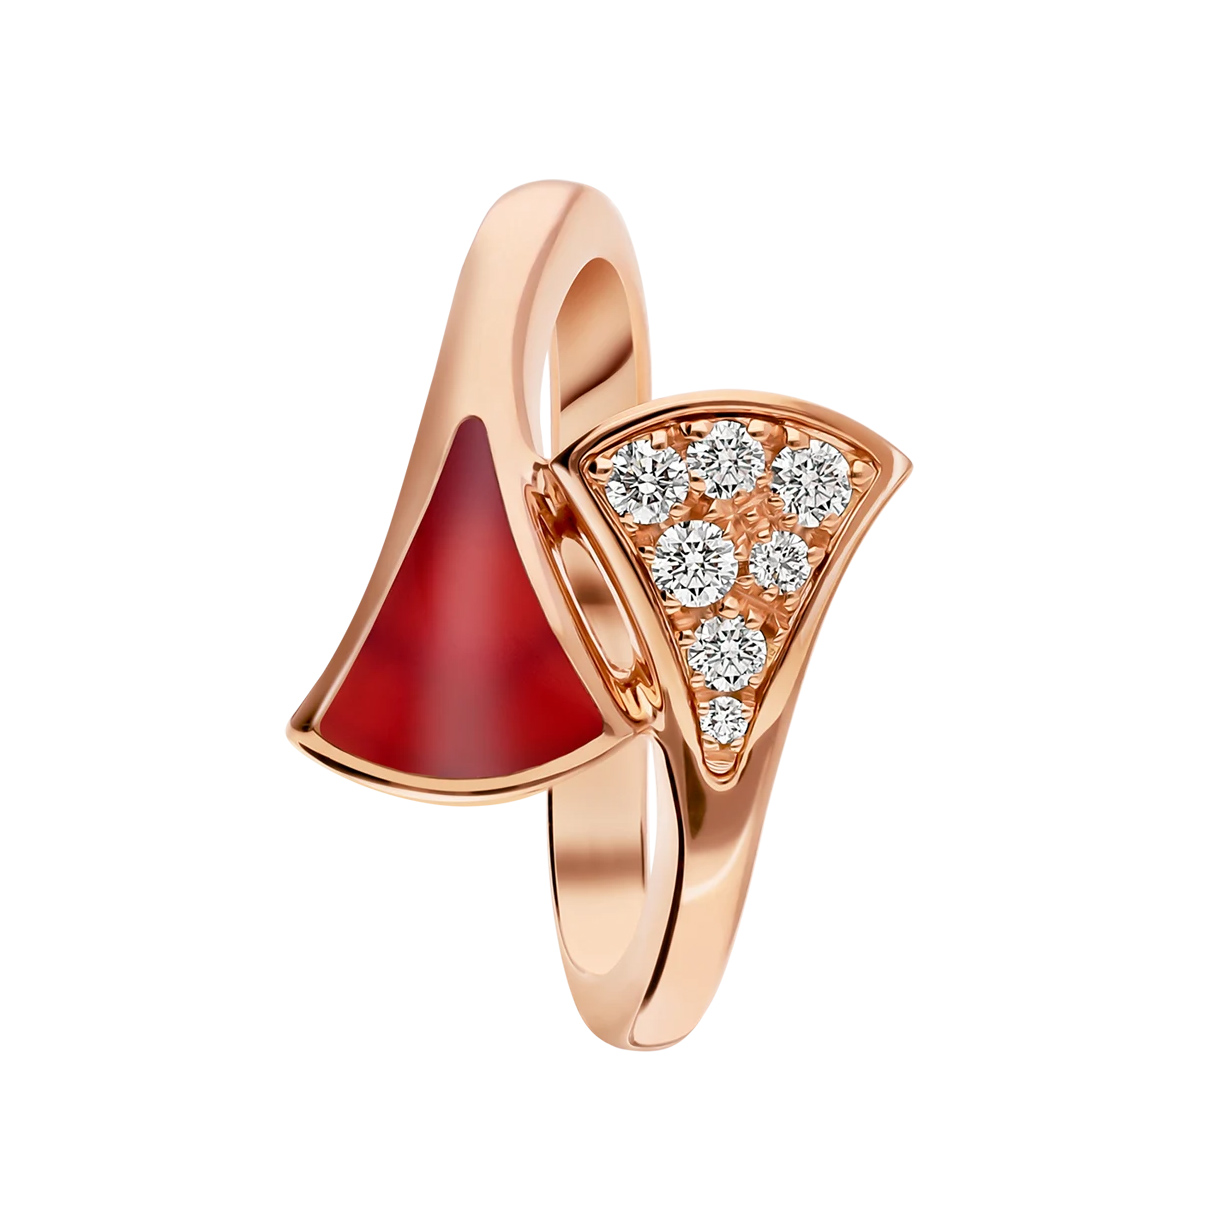 Grosir 18k OEM/ODM Perhiasan set cincin emas mawar dengan elemen akik dan berlian pavé 20 tahun dalam perhiasan OEM